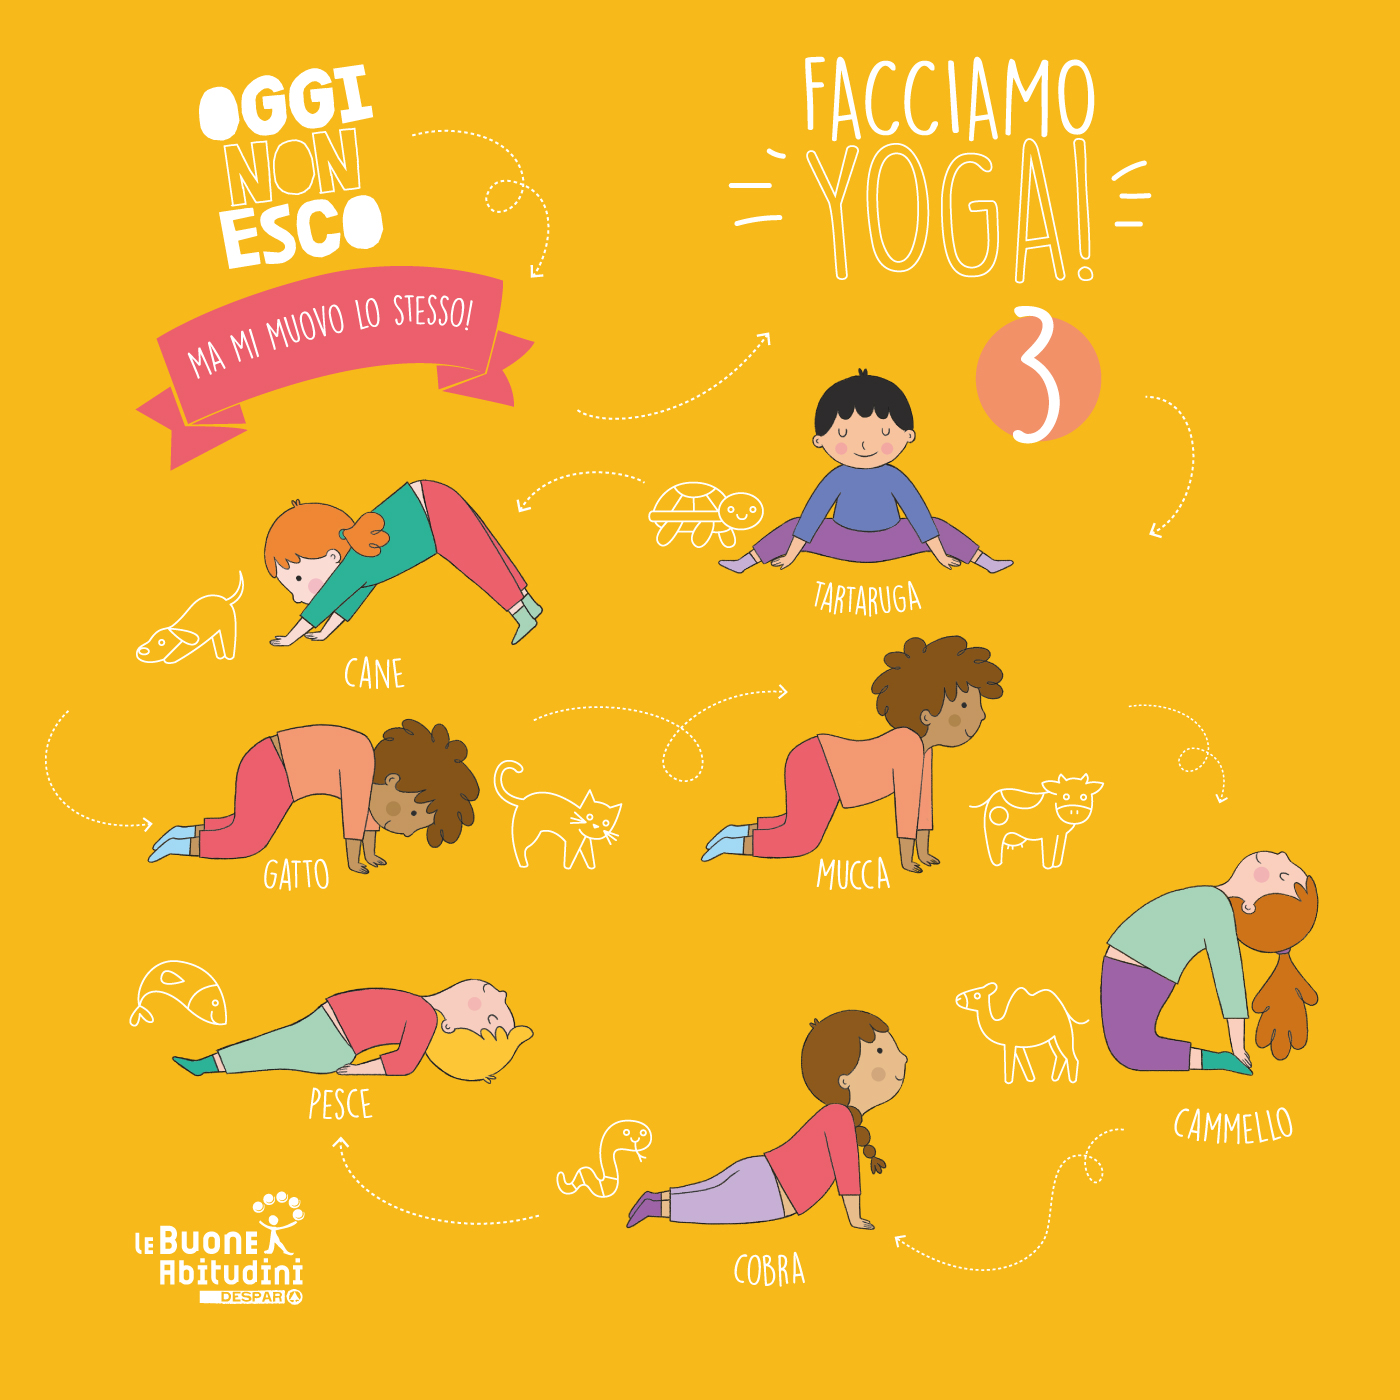 Facciamo Yoga insieme ai bambini: le posizioni degli animali